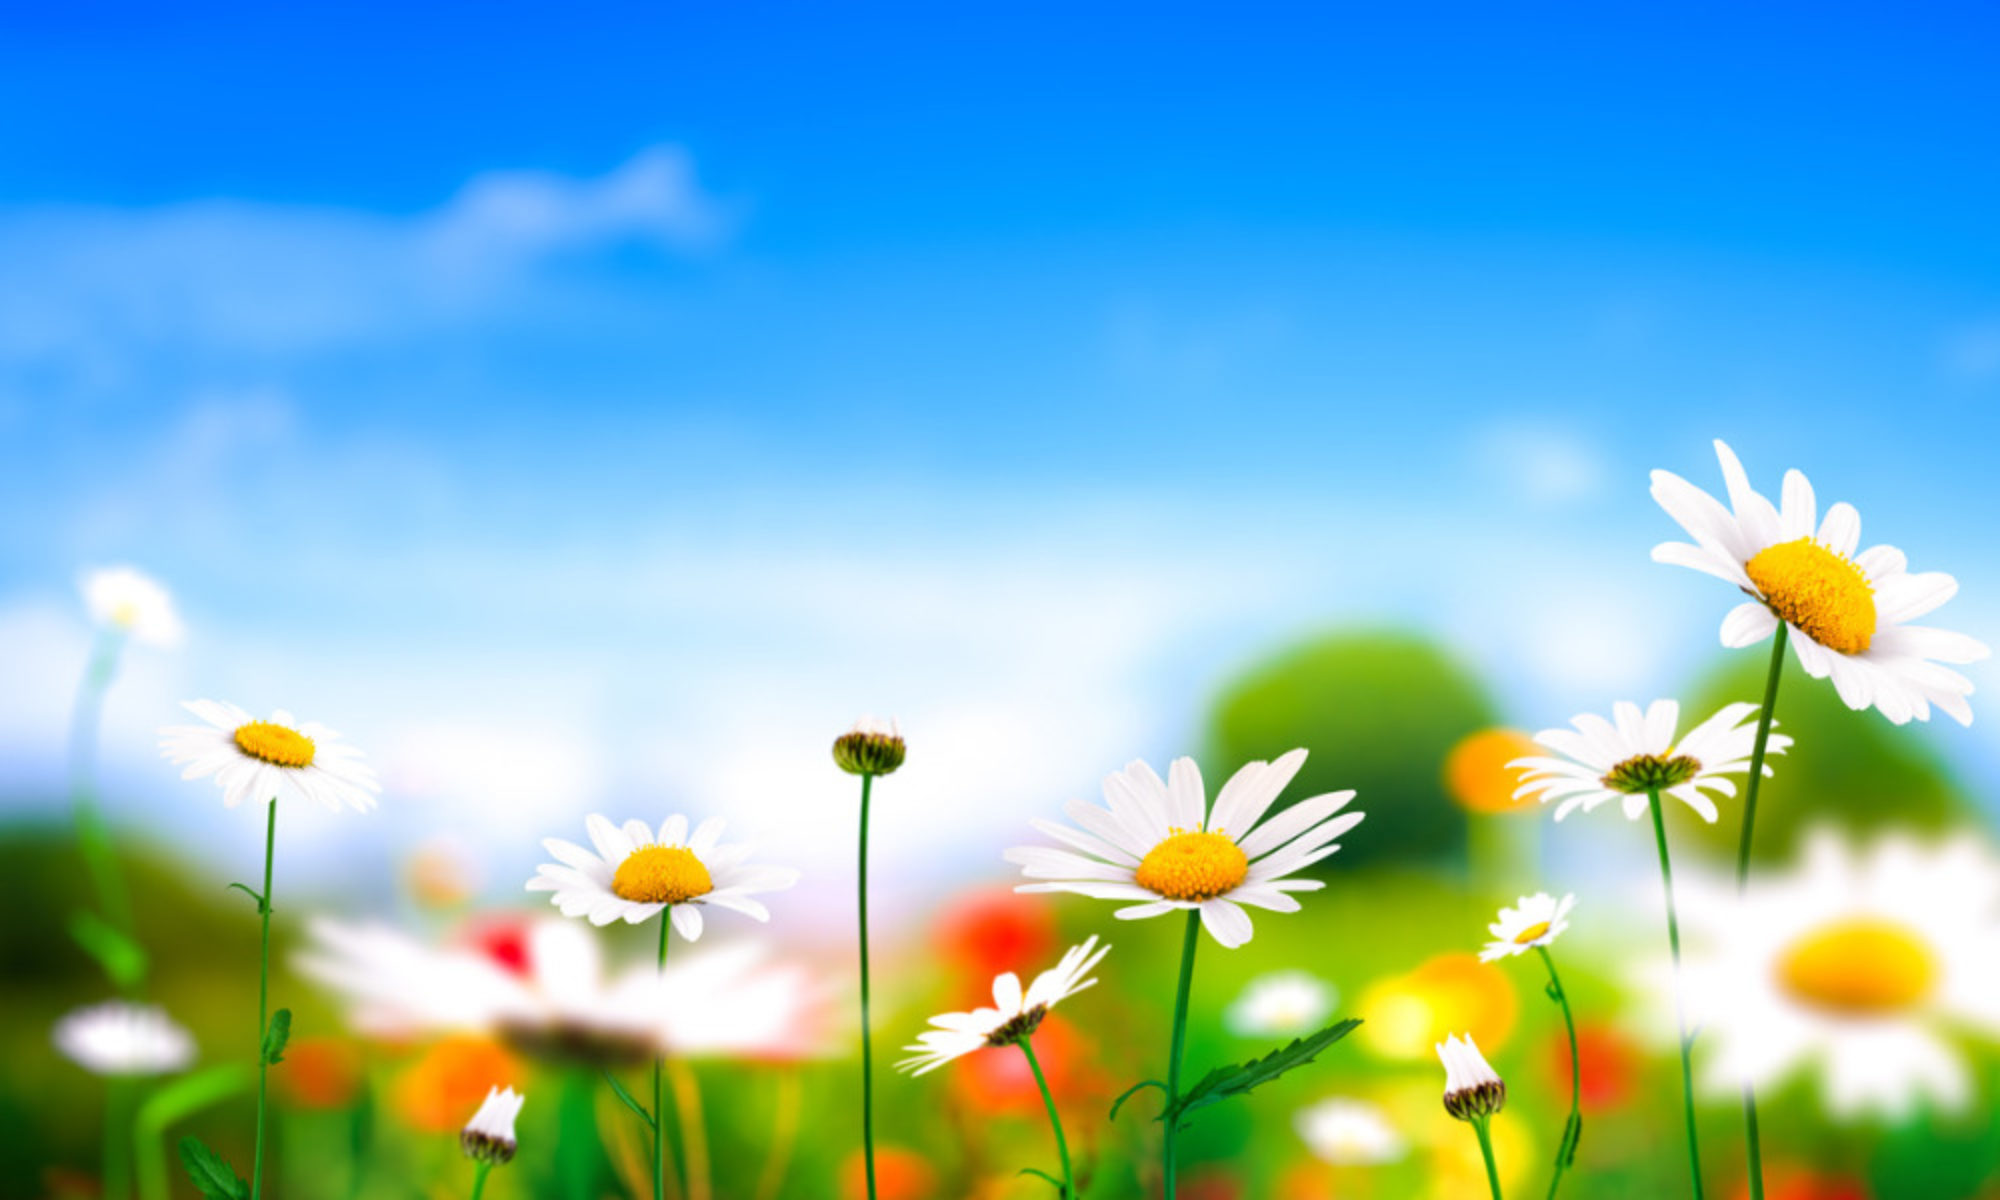 Closeup of daisies against a bright blue sky